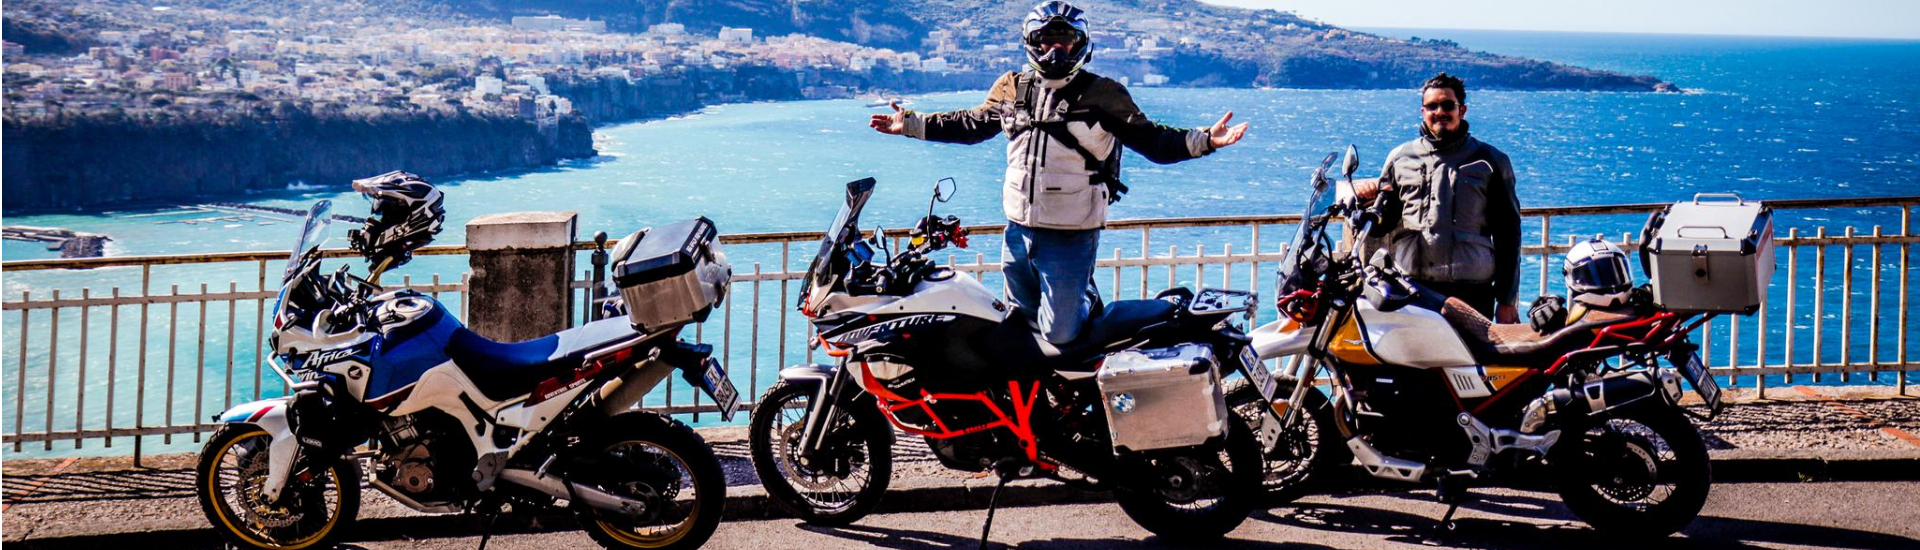 costiera-amalfitana-with-motorbike-banner-b.jpeg